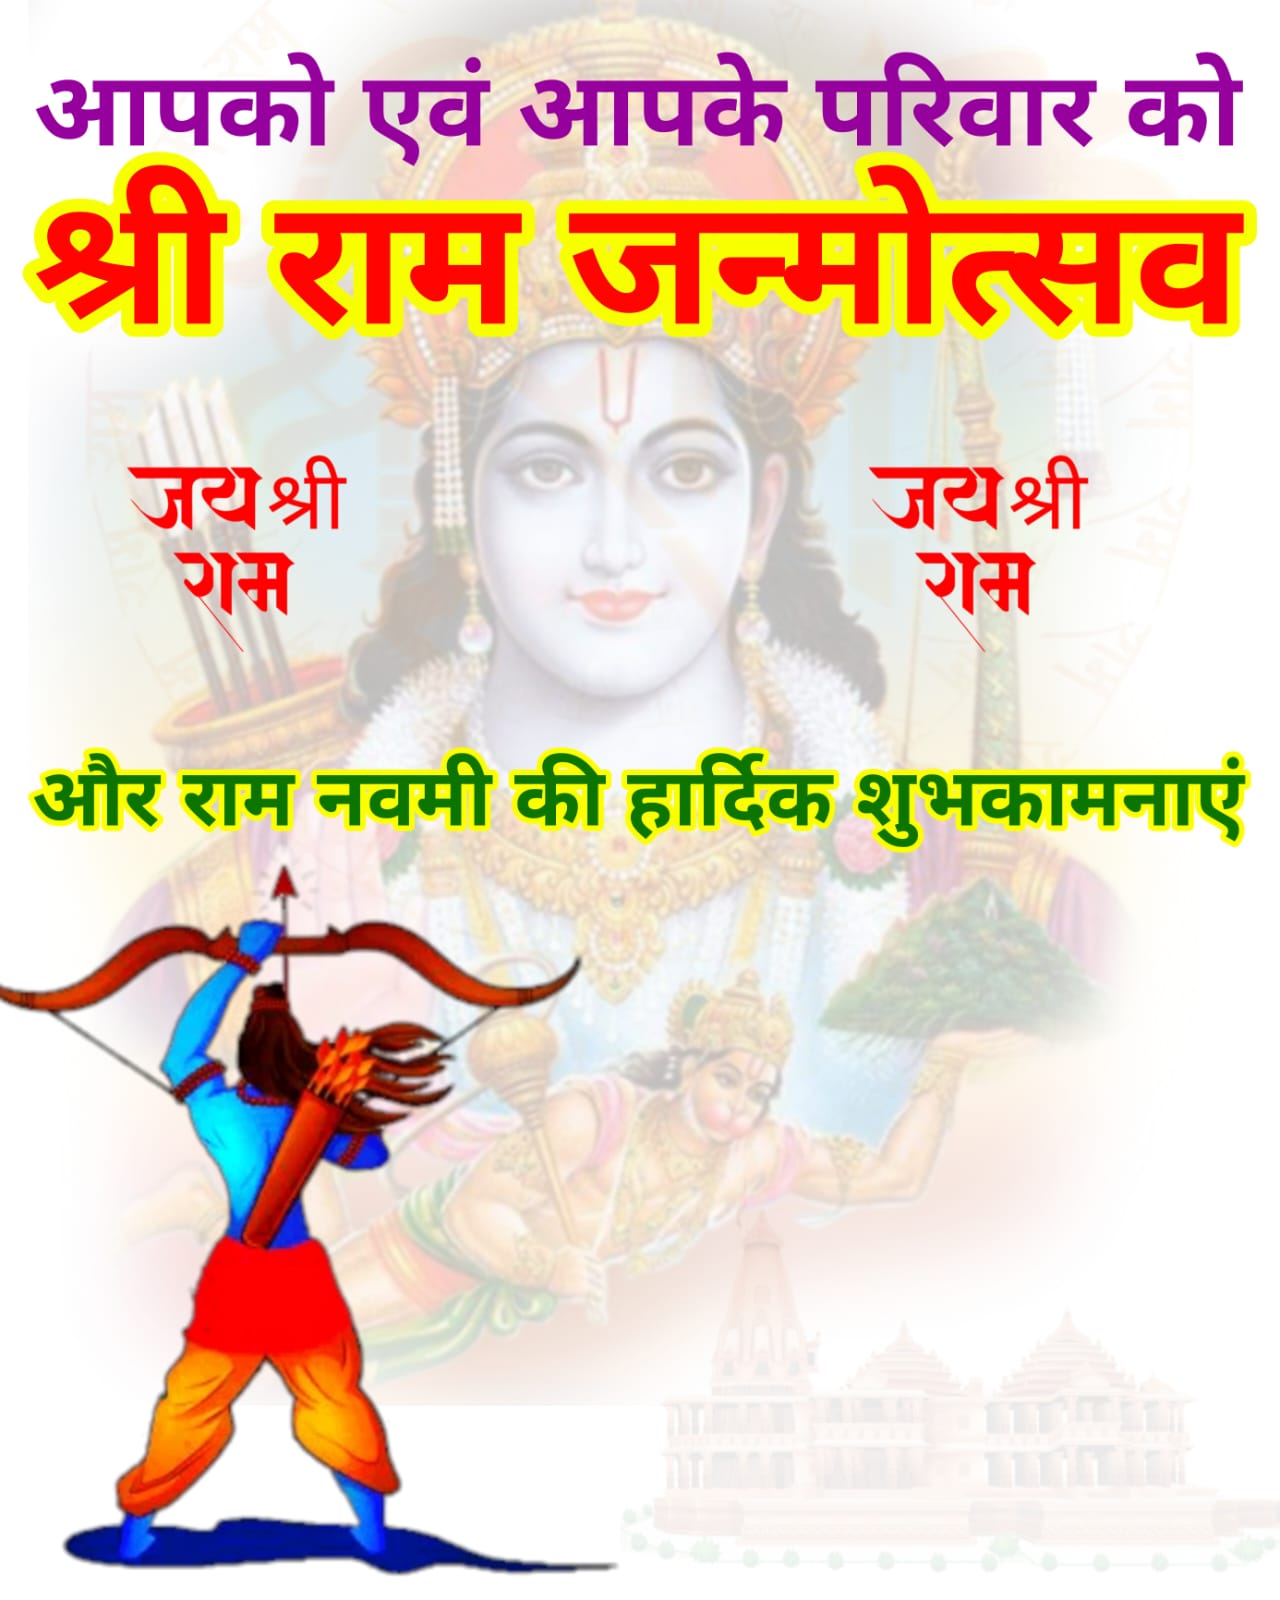 Shri Ram Navami ki Hardik Shubhkamnaye poster banner images